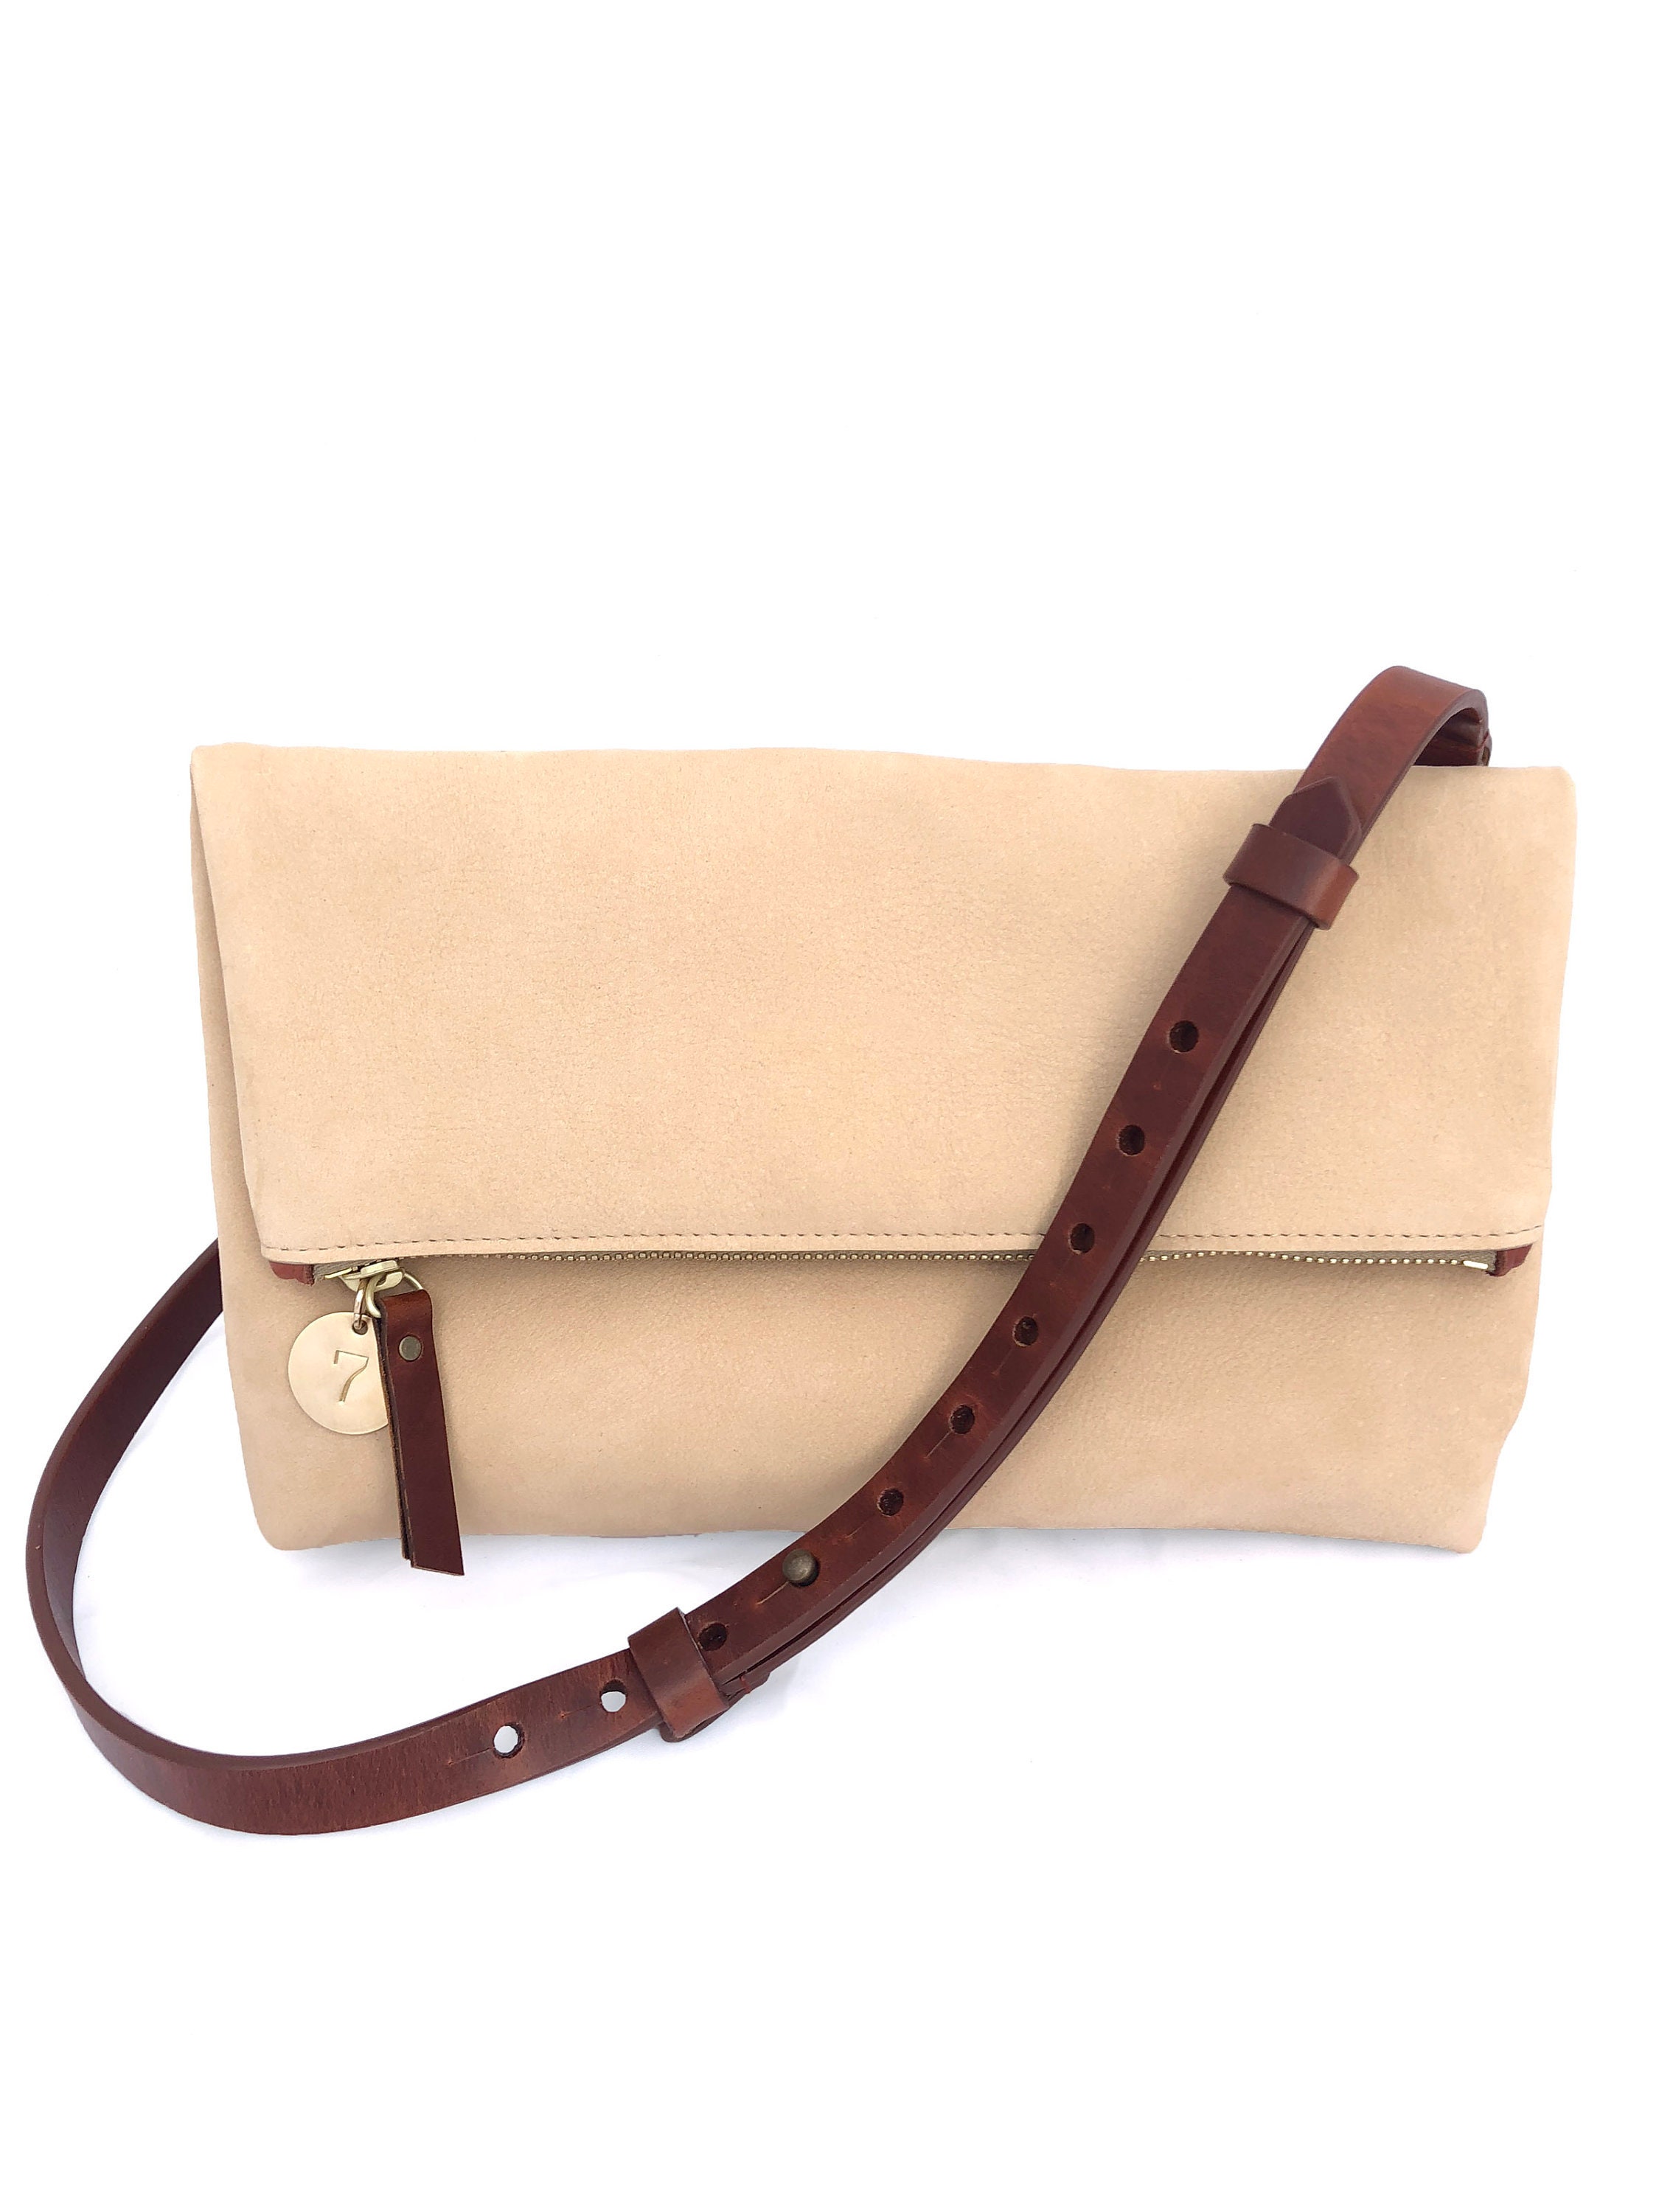 Shop CLARE VIVIER Plain Leather Crossbody Shoulder Bags by Cocoshare